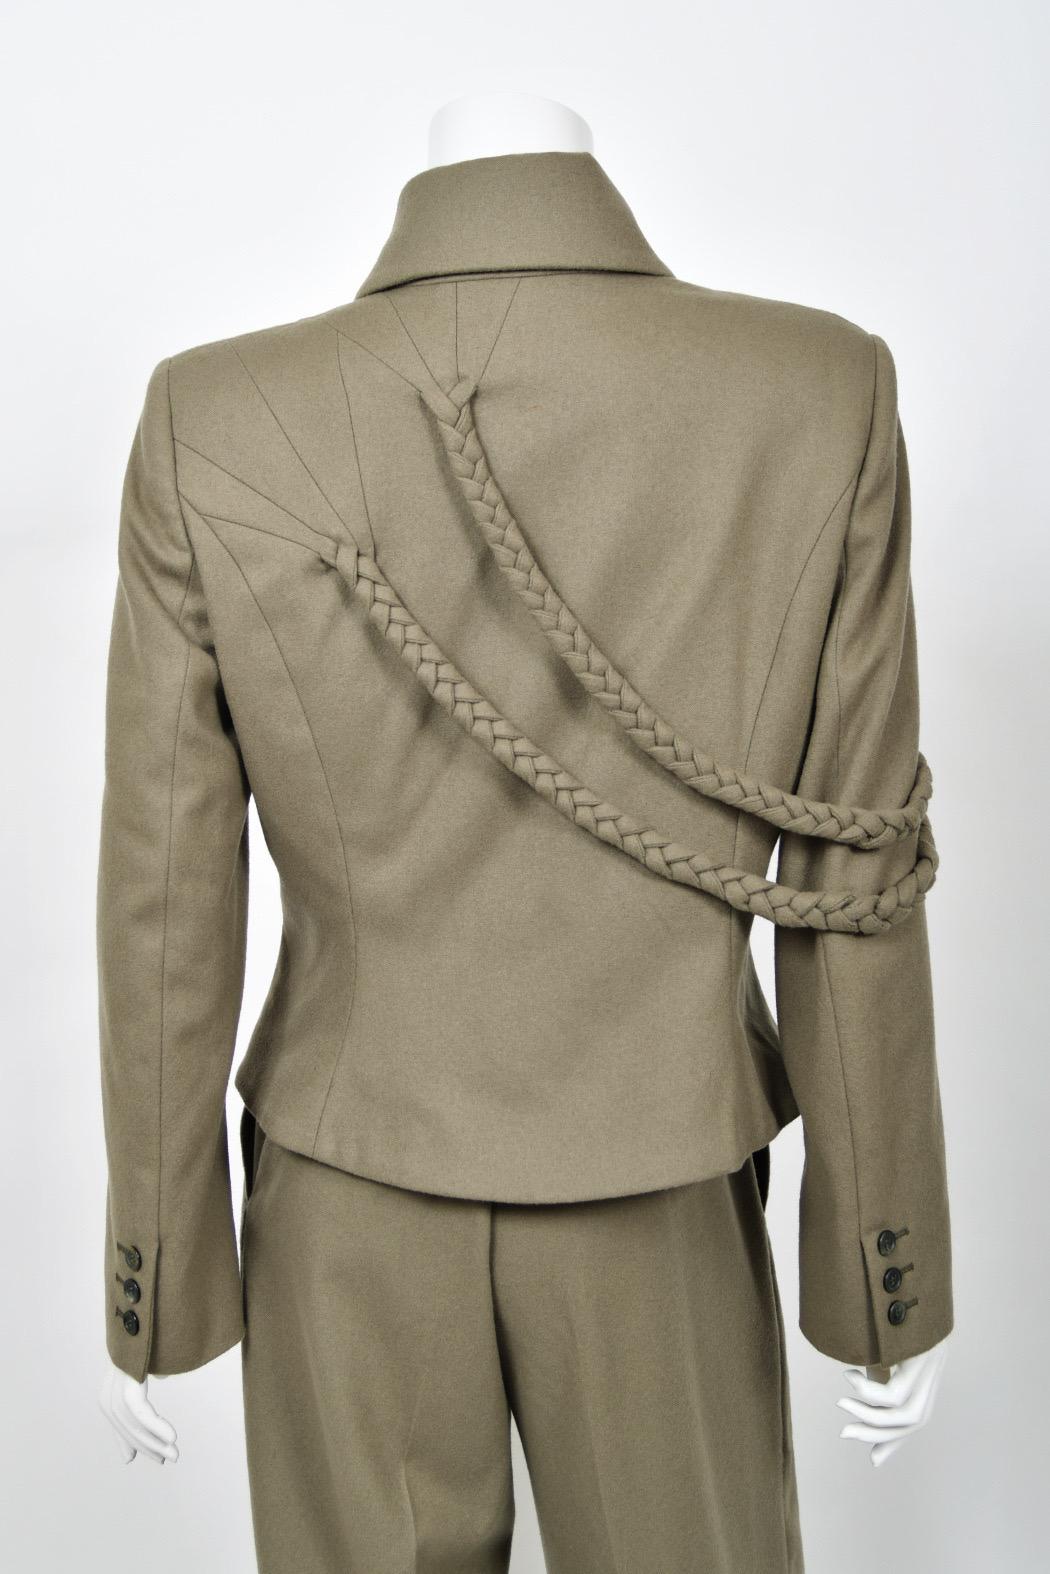 2001 Alexander McQueen Documented Runway Moss-Green Wool Braided Jacket Pantsuit For Sale 11